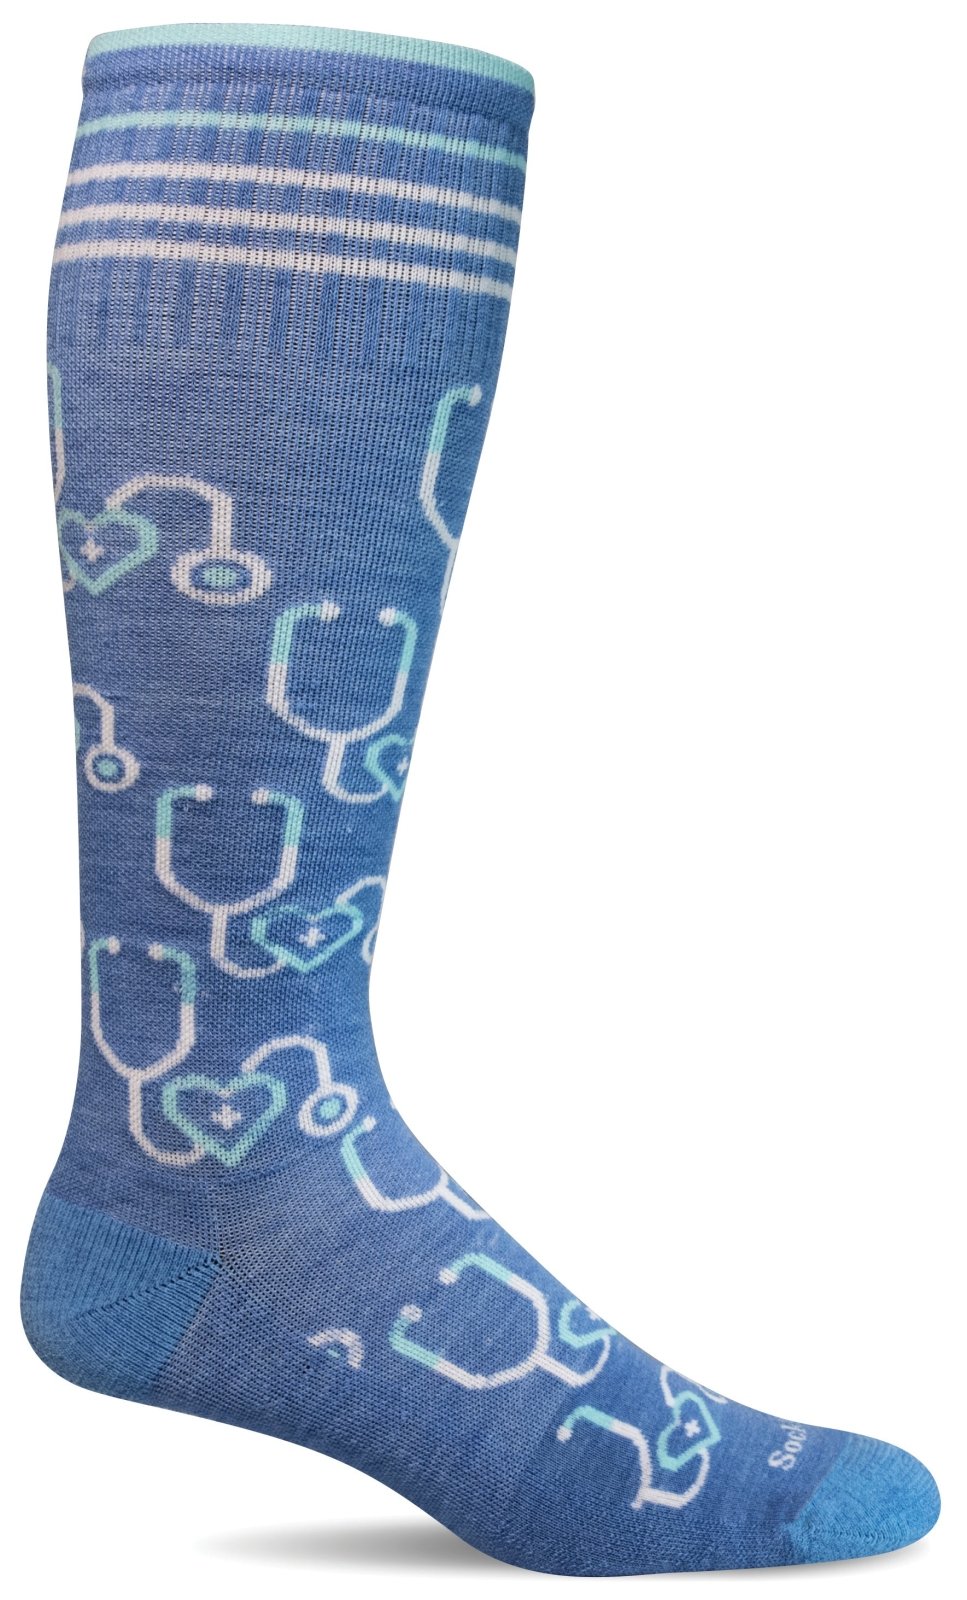 Women's Hero | Firm Graduated Compression Socks - Merino Wool Lifestyle Compression - Sockwell